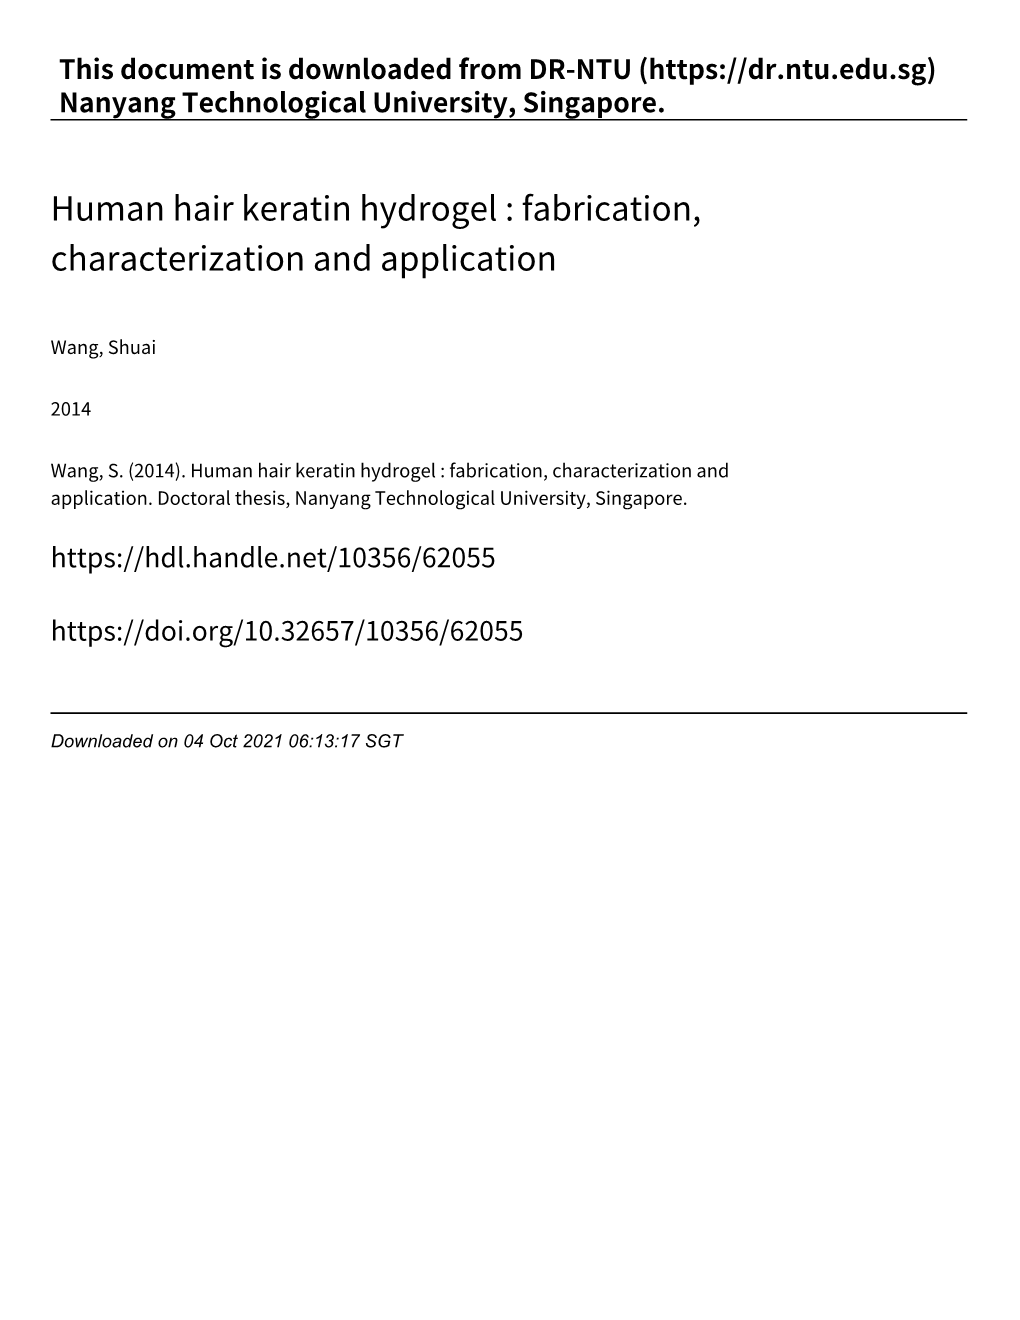 Human Hair Keratin Hydrogel : Fabrication, Characterization and Application